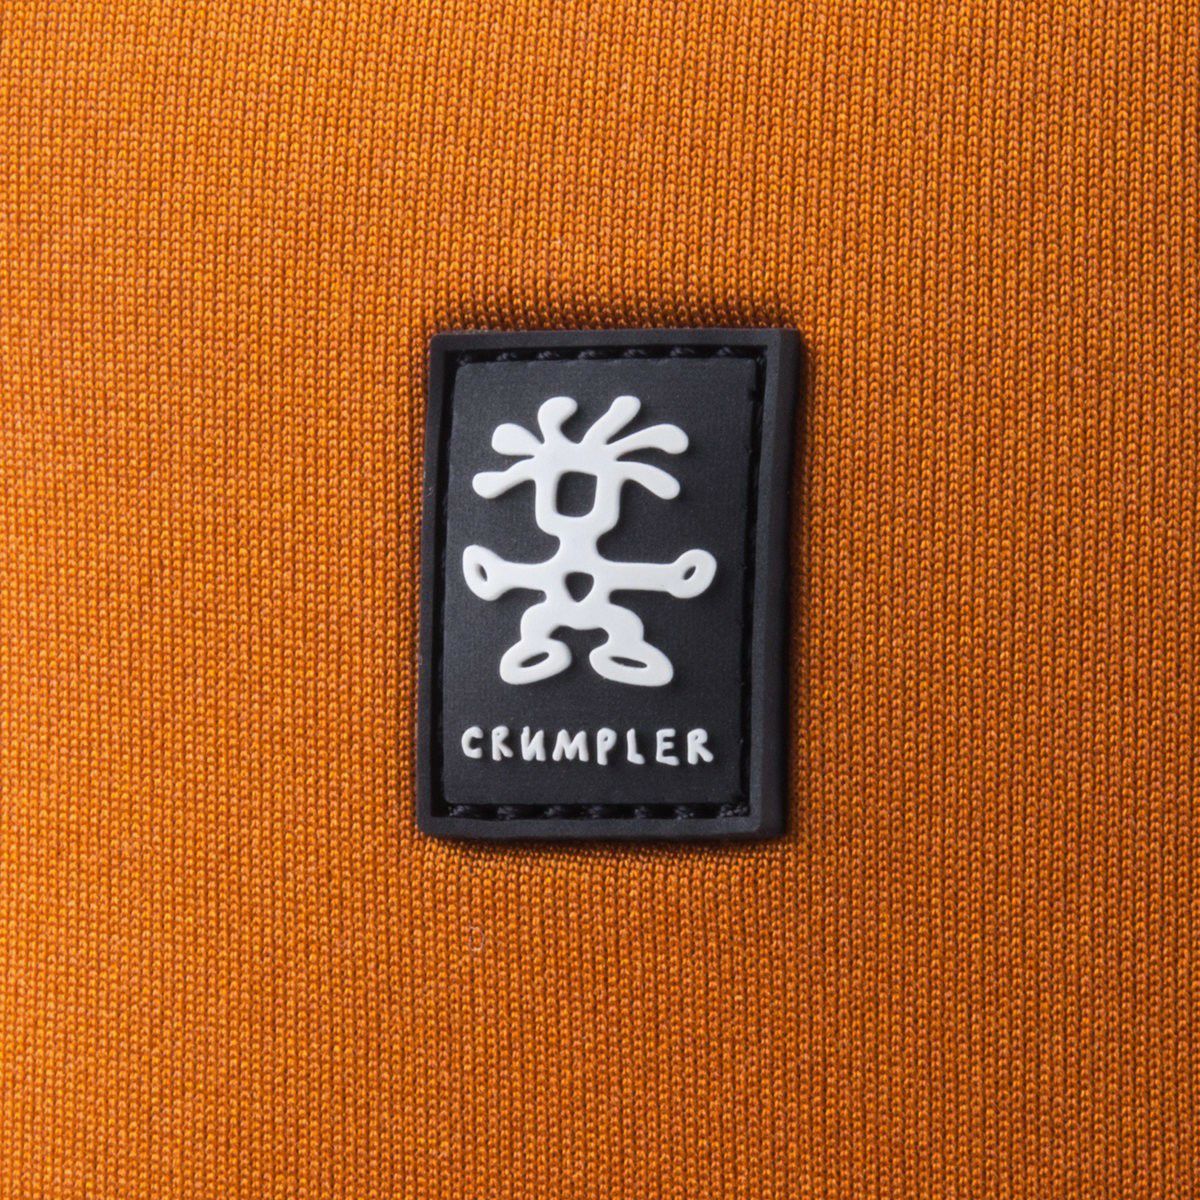 Crumpler Base Layer Camera Cube XS burned orange anthracite (BLCC-XS-003) žarko narančasta antracit torba za fotoaparat